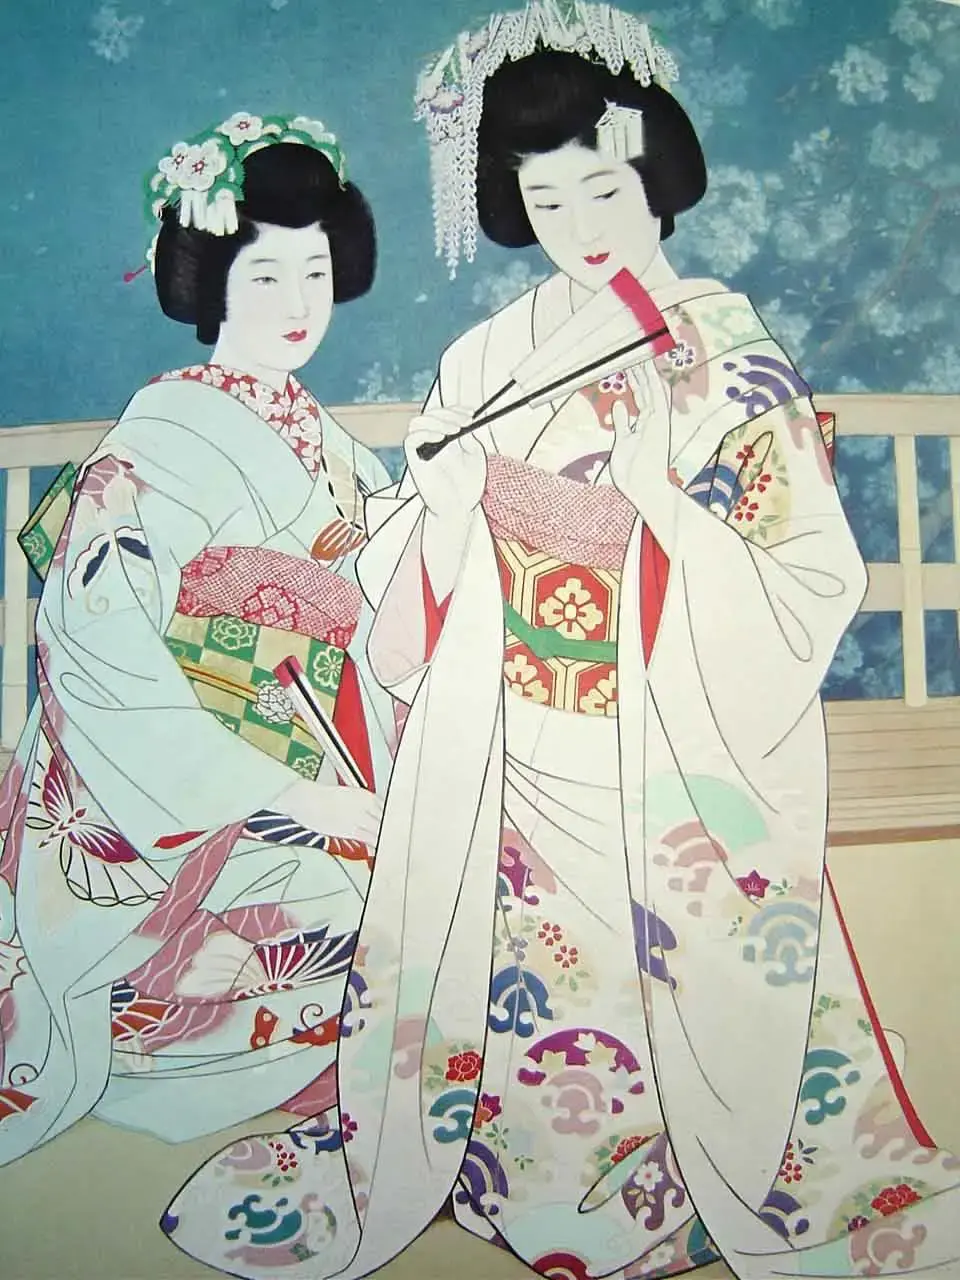 艺伎(げいしゃ)是一种日本表演艺术职业,产生于17世纪的东京和大阪